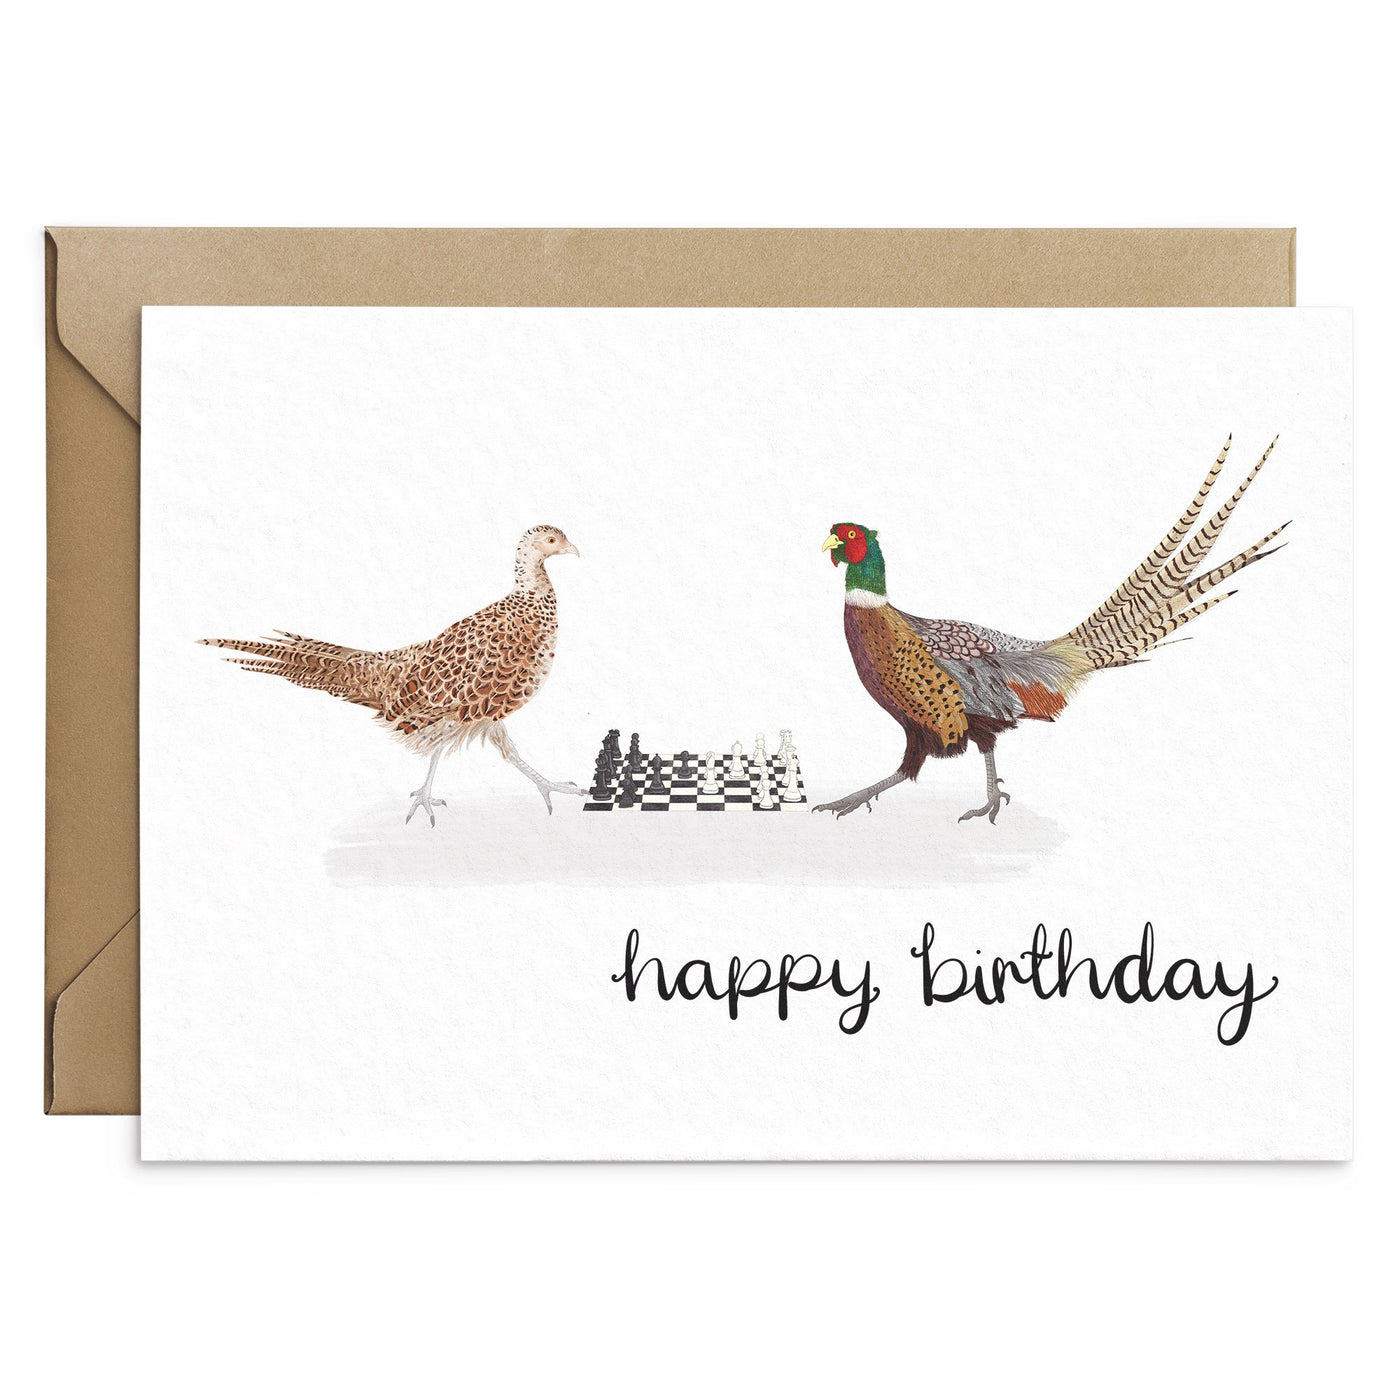 Funny Pheasants Birthday Card - Poppins & Co.